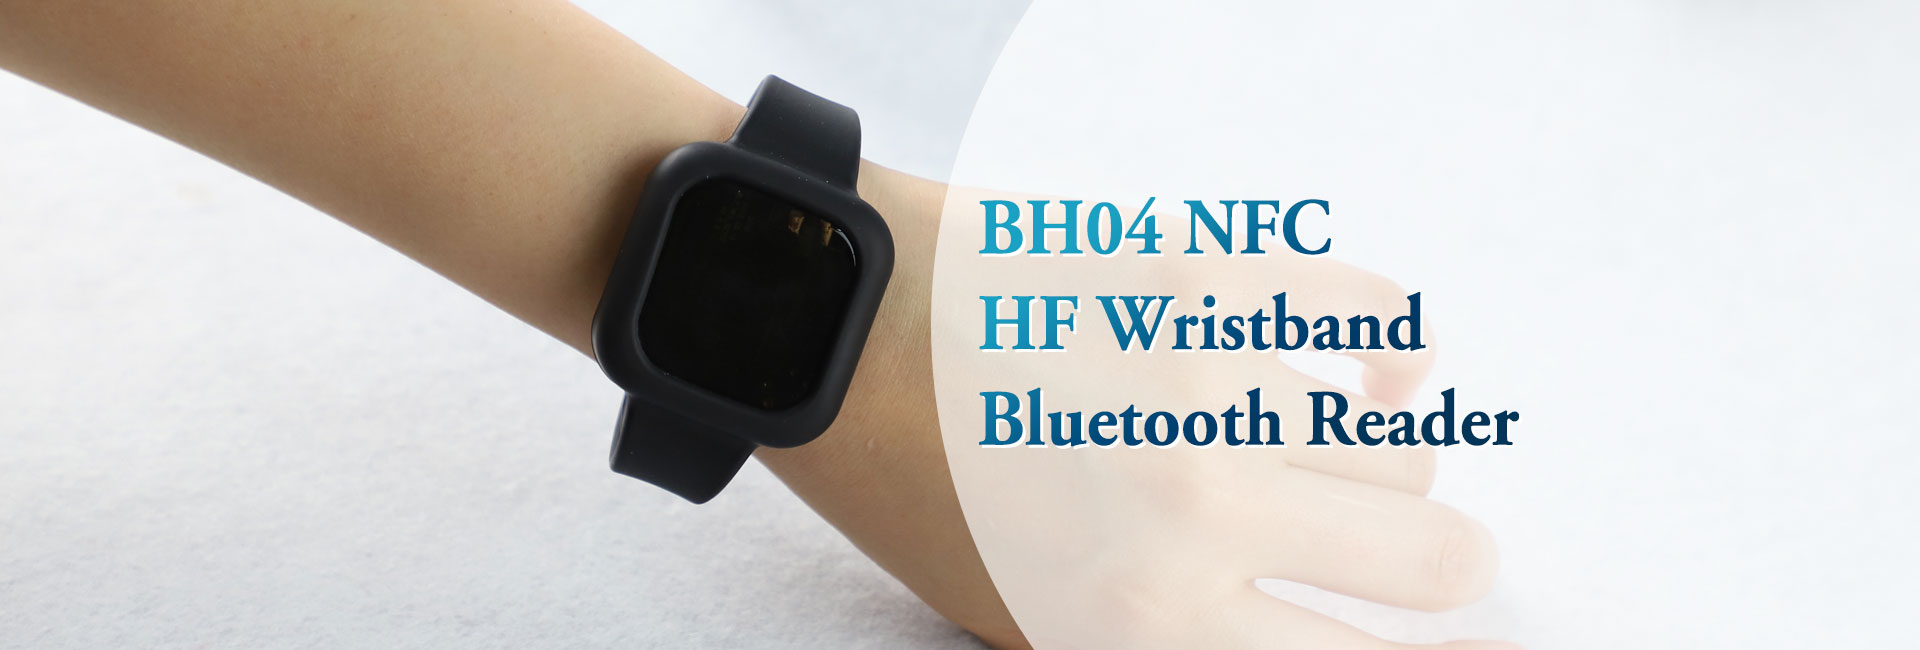 黑洞04 NFC HF Wristband Bluetooth Reader